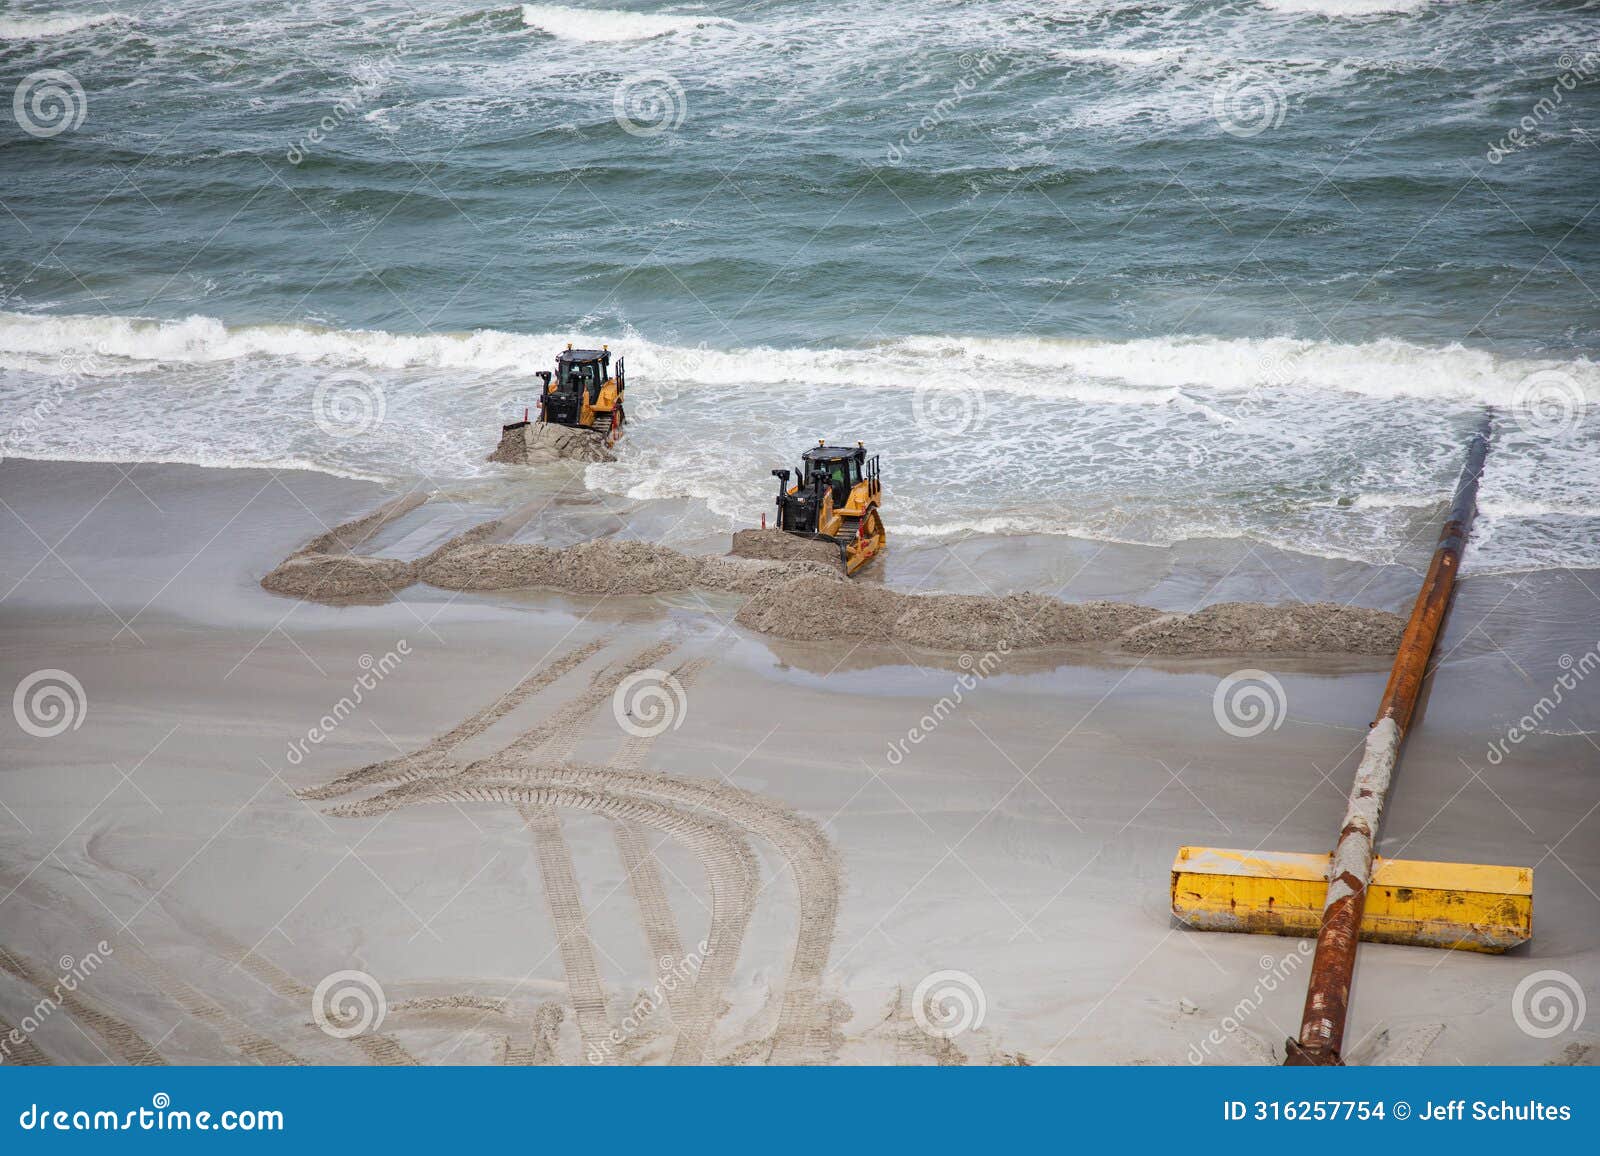 beach sand restoration